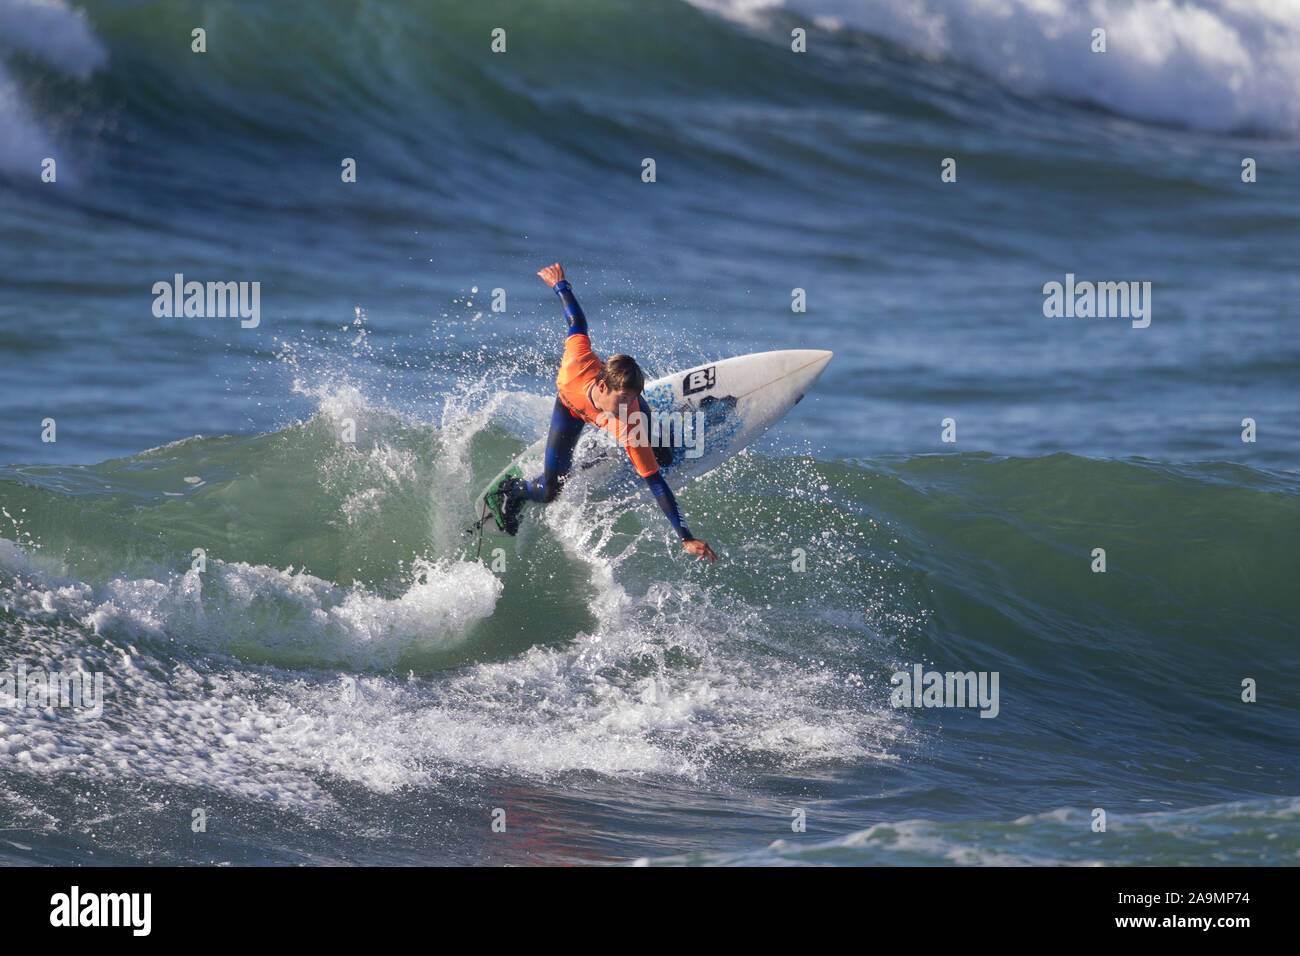 Surfer wearing Orange Shirt Cut Back Stock Photo